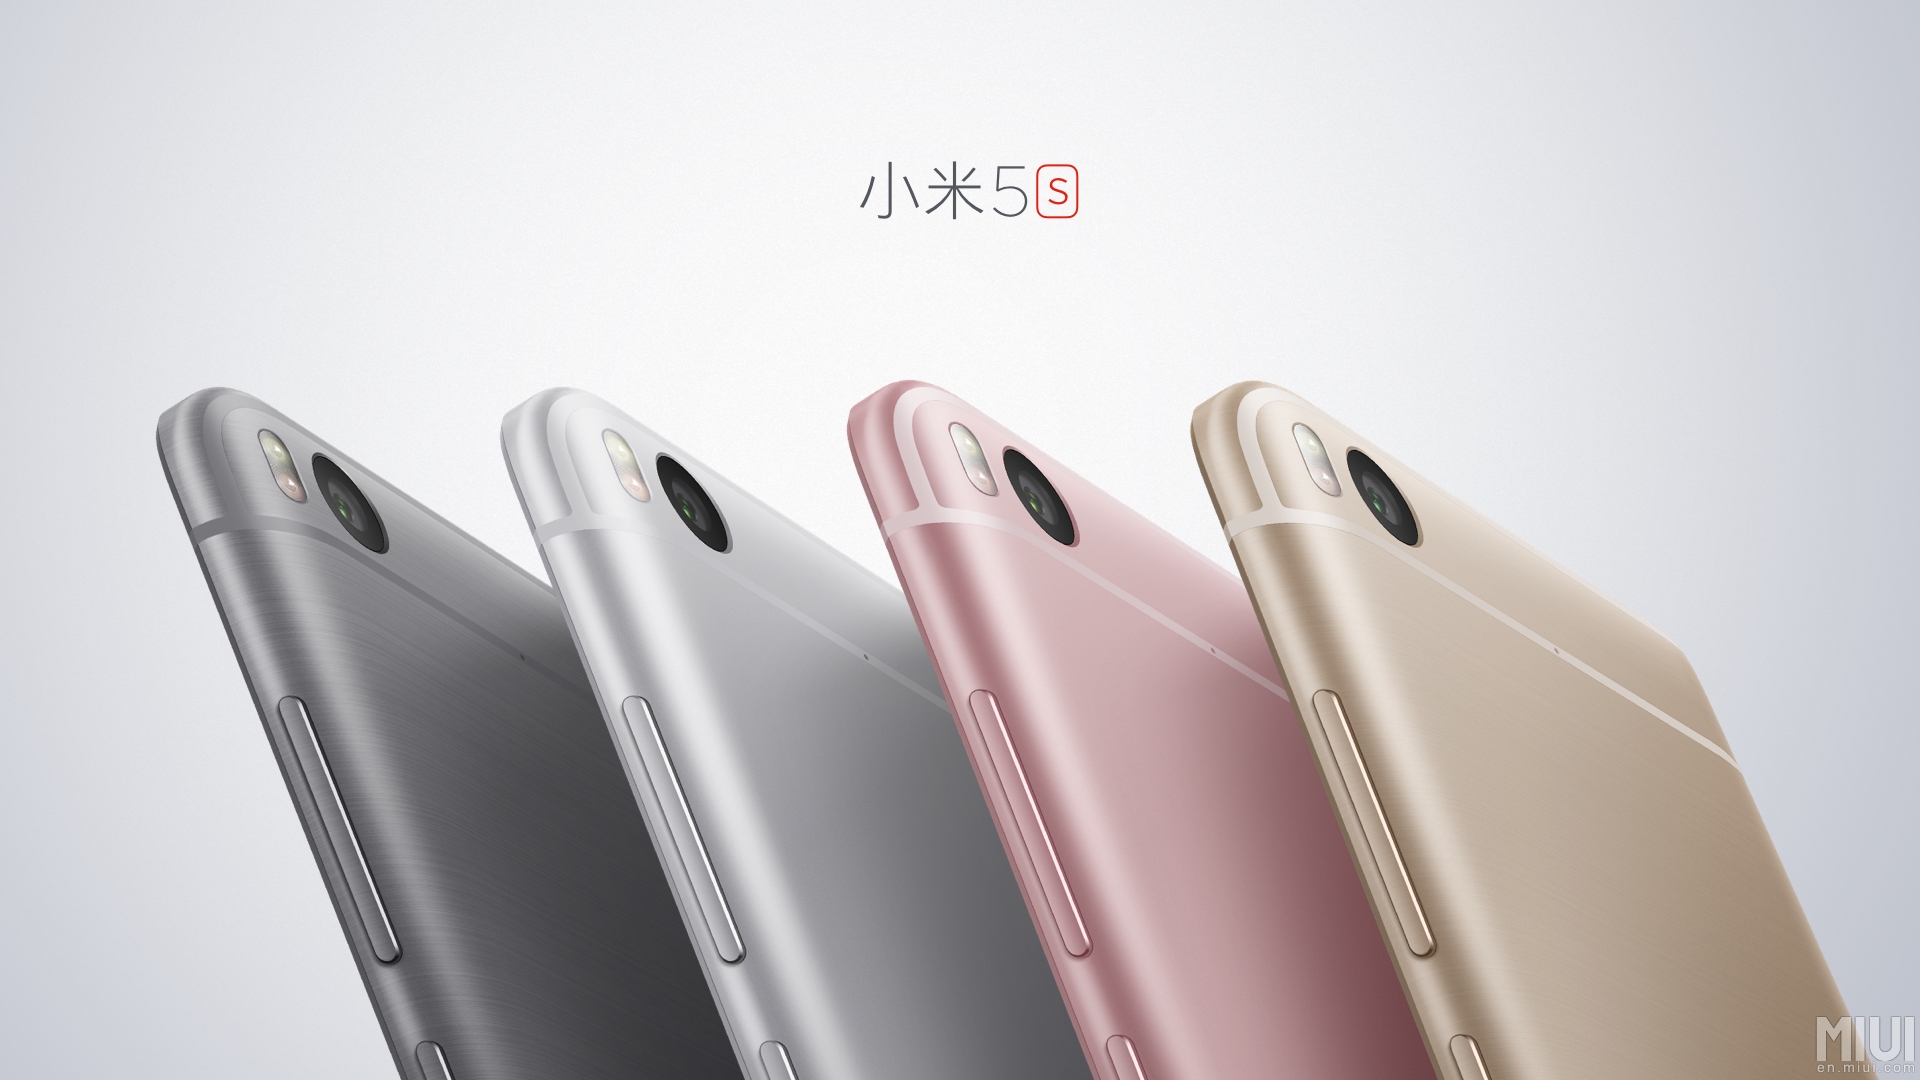 Xiaomi Mi 5s design and official camera samples | Xiaoimi Mi 5s Plus | เปิดตัวอย่างเป็นทางการ Xiaomi Mi 5s และ Mi 5s Plus สเปคจัดเต็มกล้องเทพในราคาที่ทุกคนเข้าถึงได้